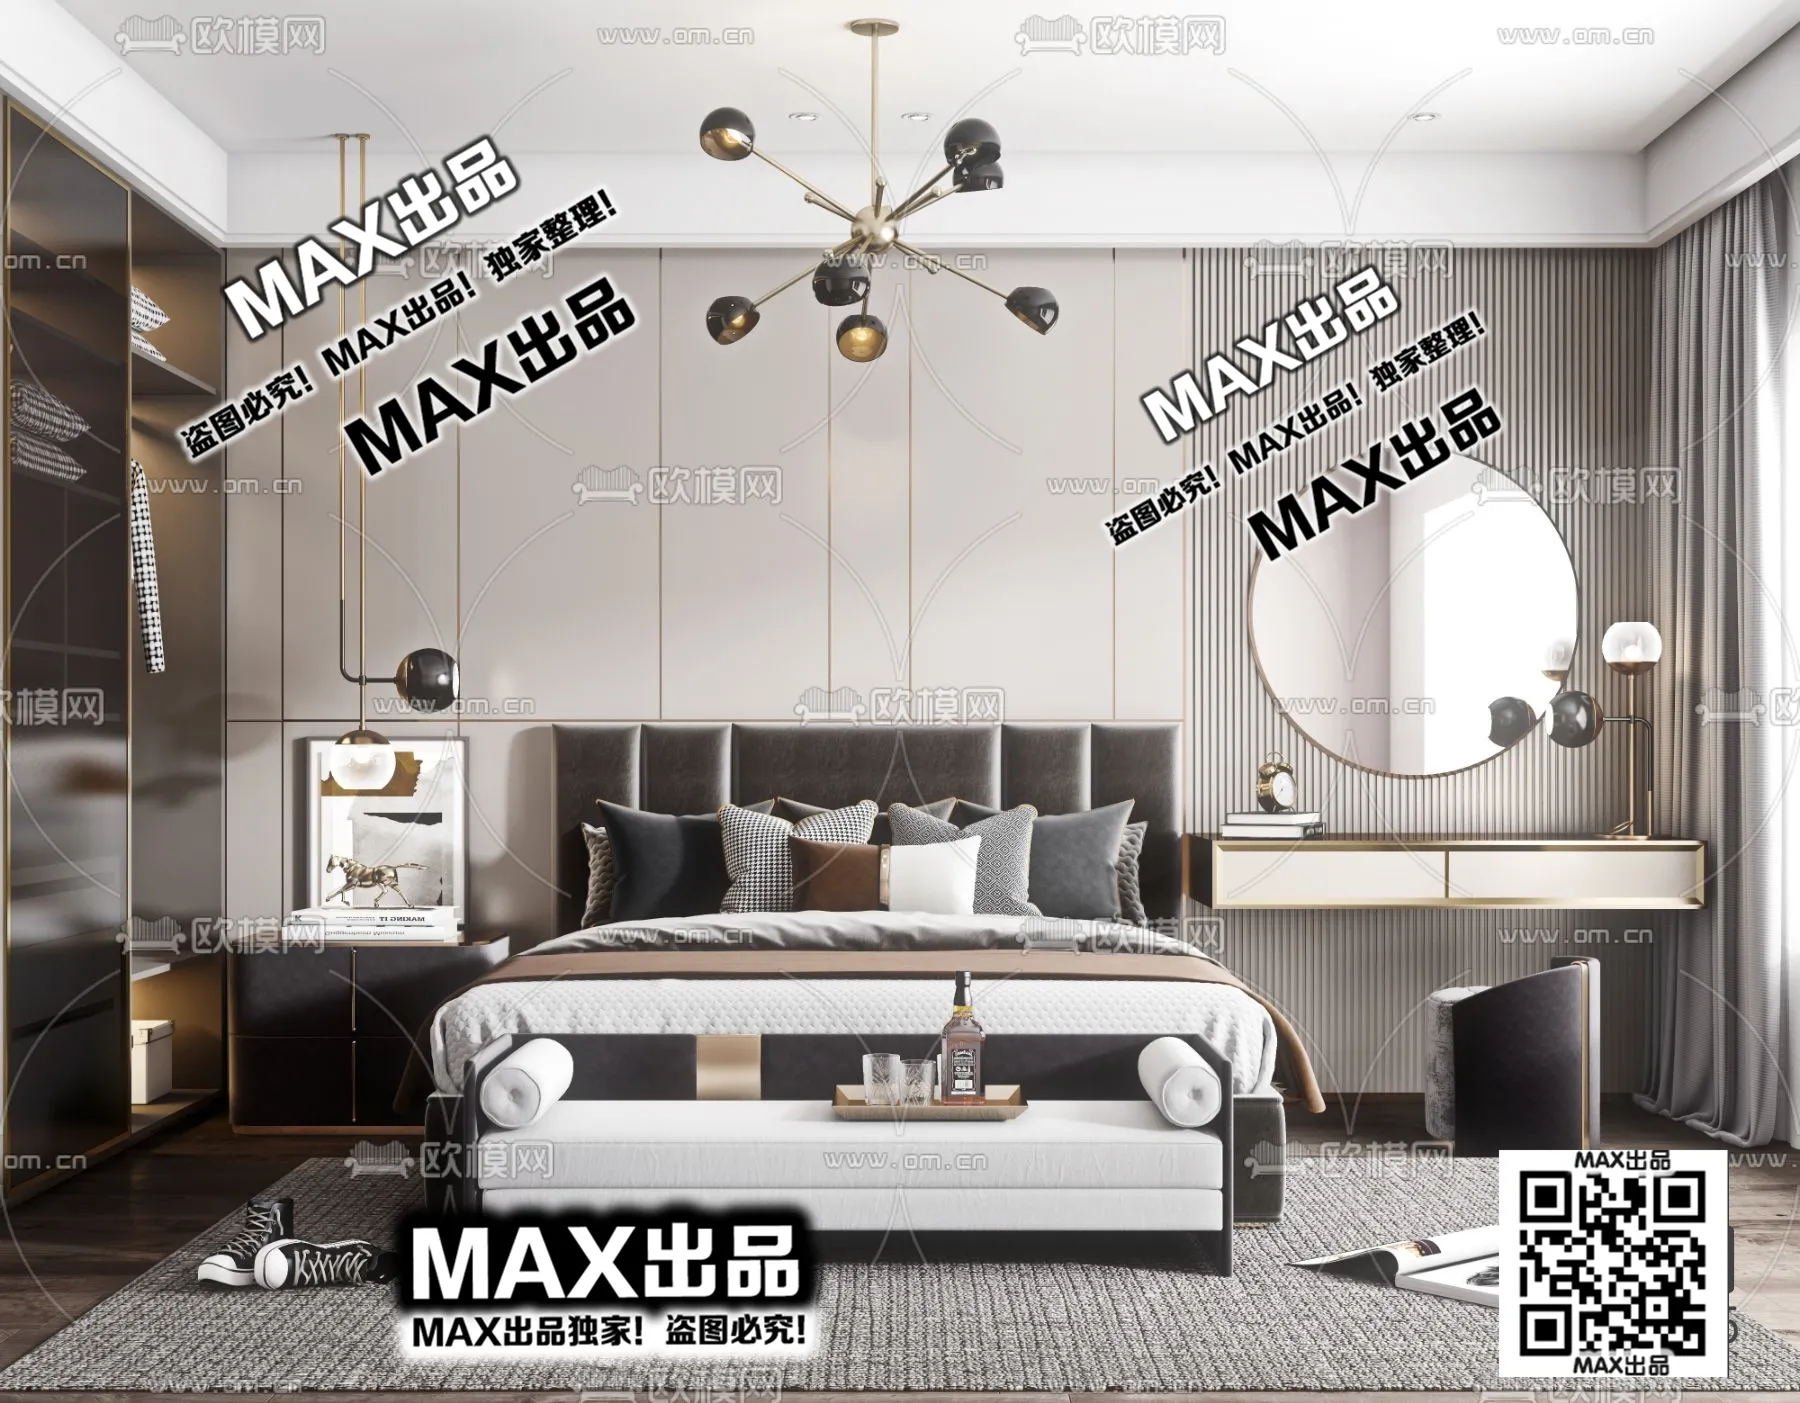 3DS MAX SCENES – LIVING ROOM – 020